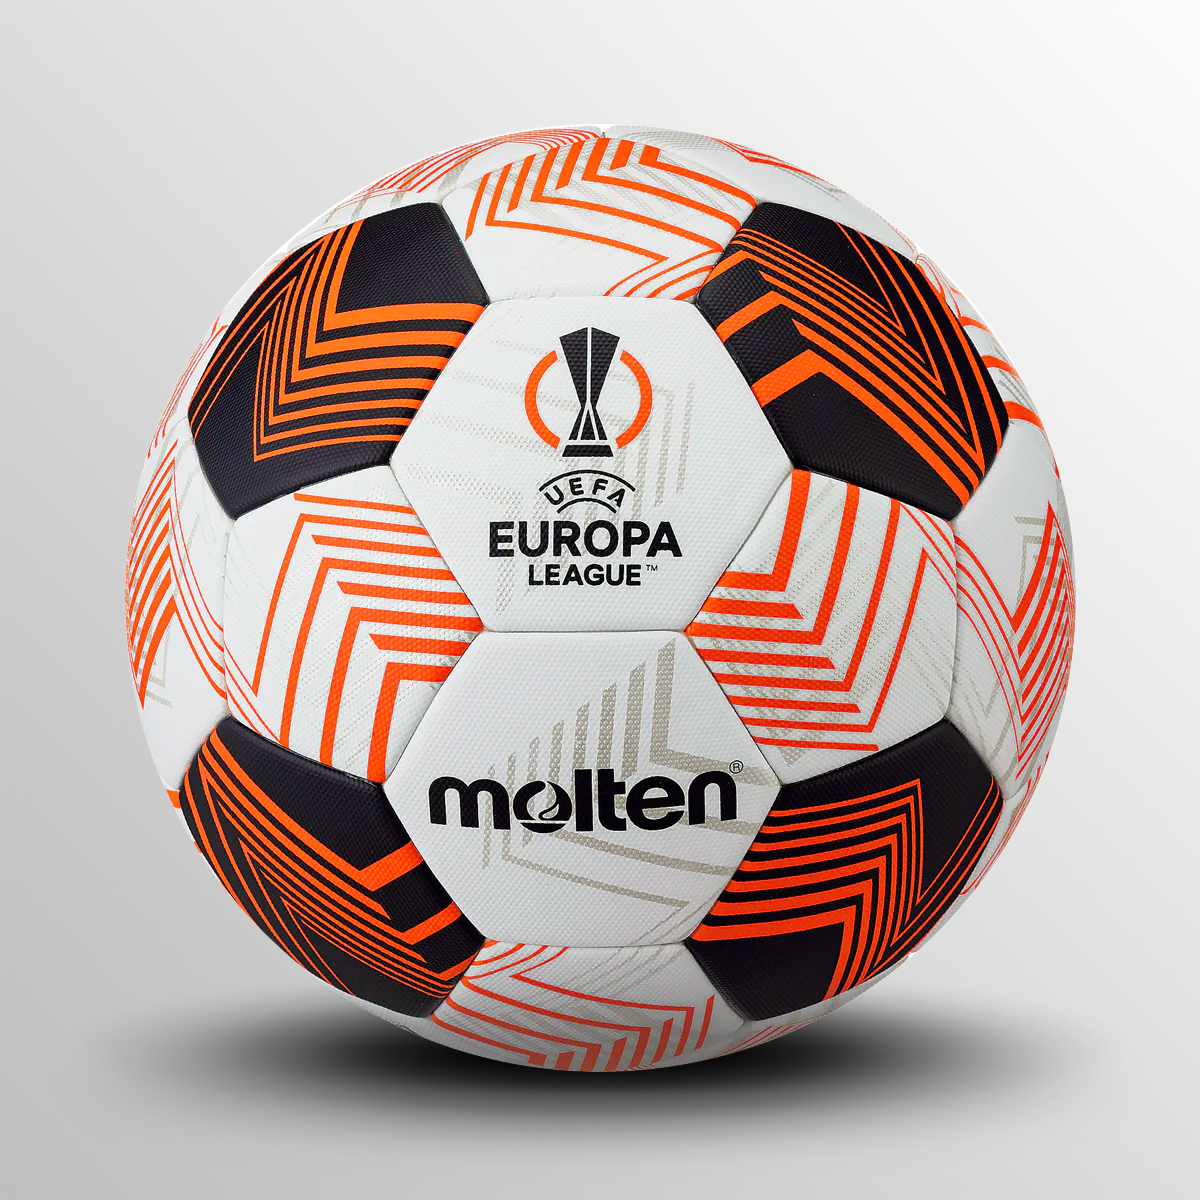 UEFA Europa League 23/24 Molten Official Match Football